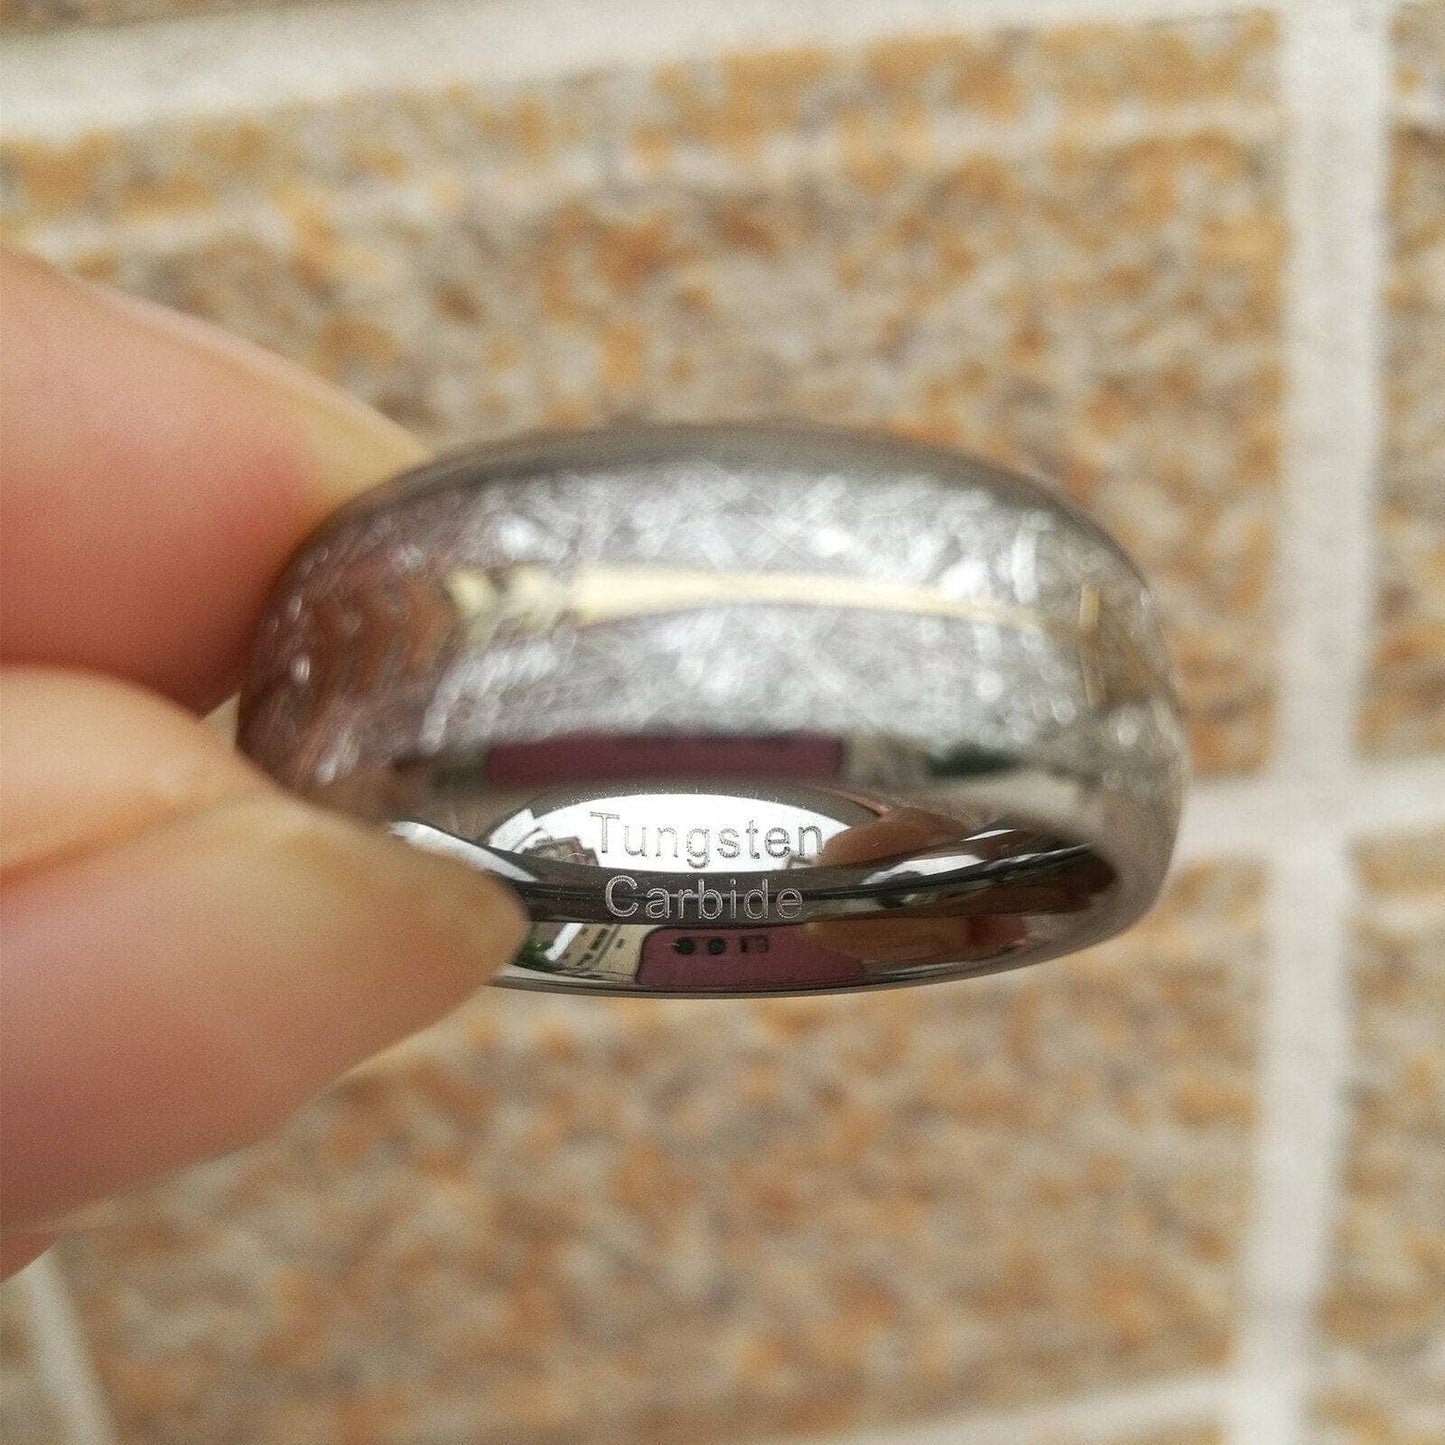 Tungsten Carbide Unique Design Fills 8mm Ring